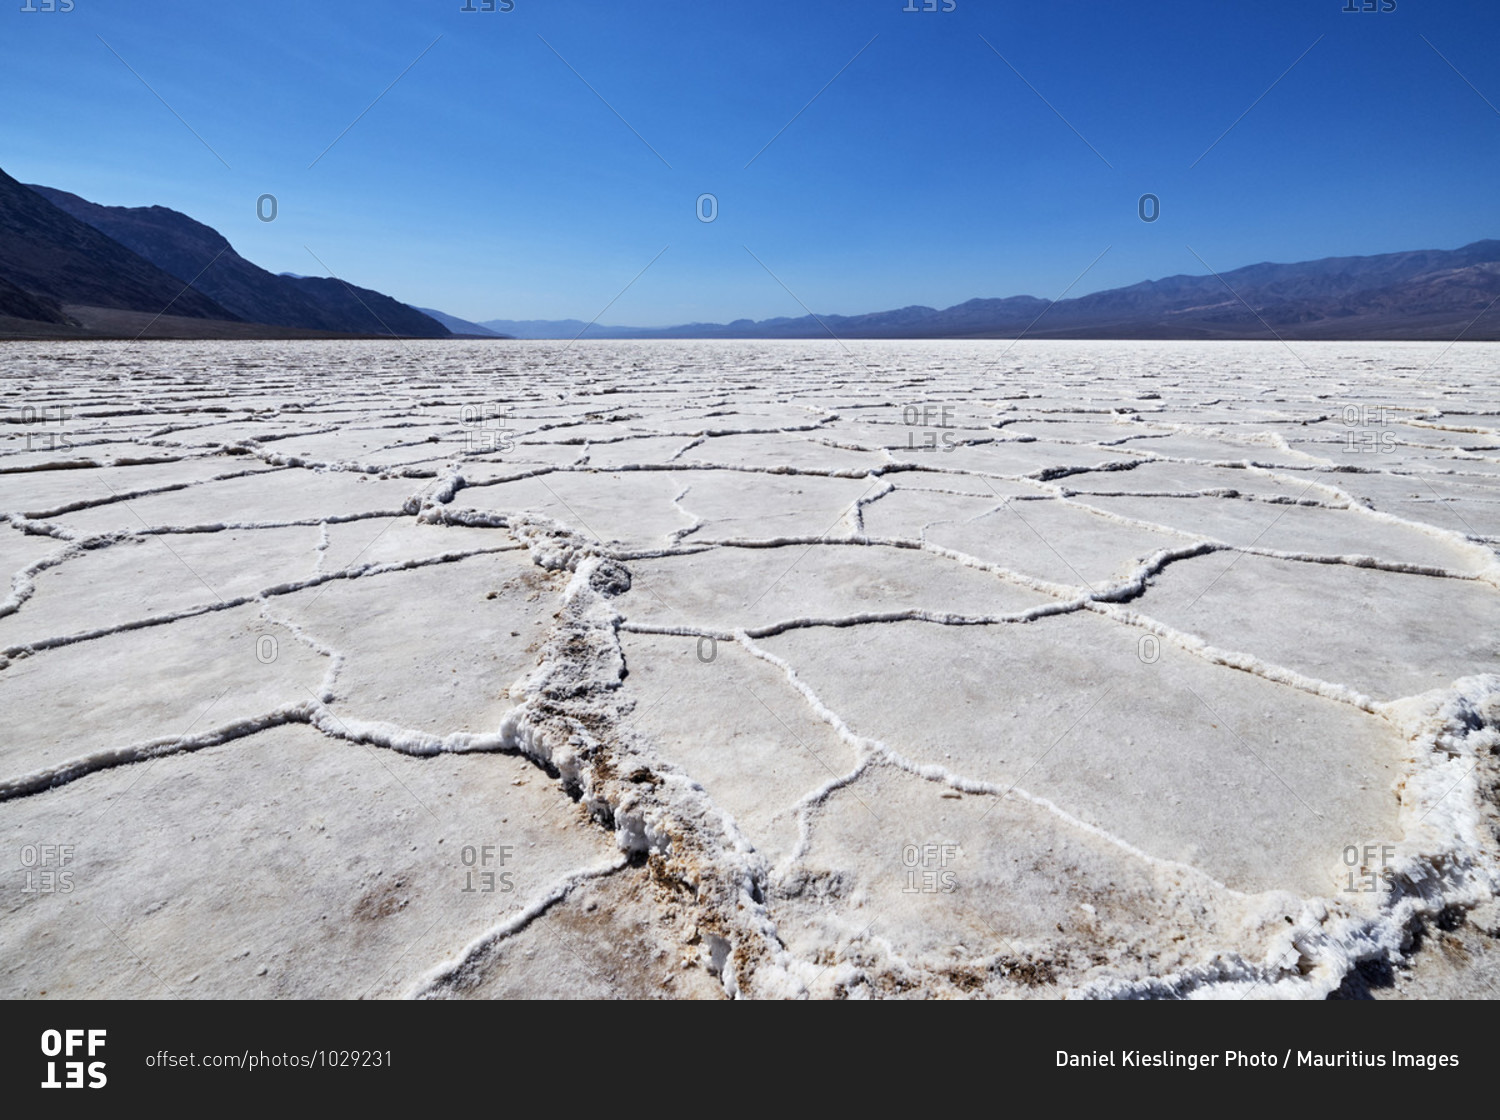 USA, United States of America, Nevada,  Death Valley National Park, Badwater Basin, Sierra Nevada, California